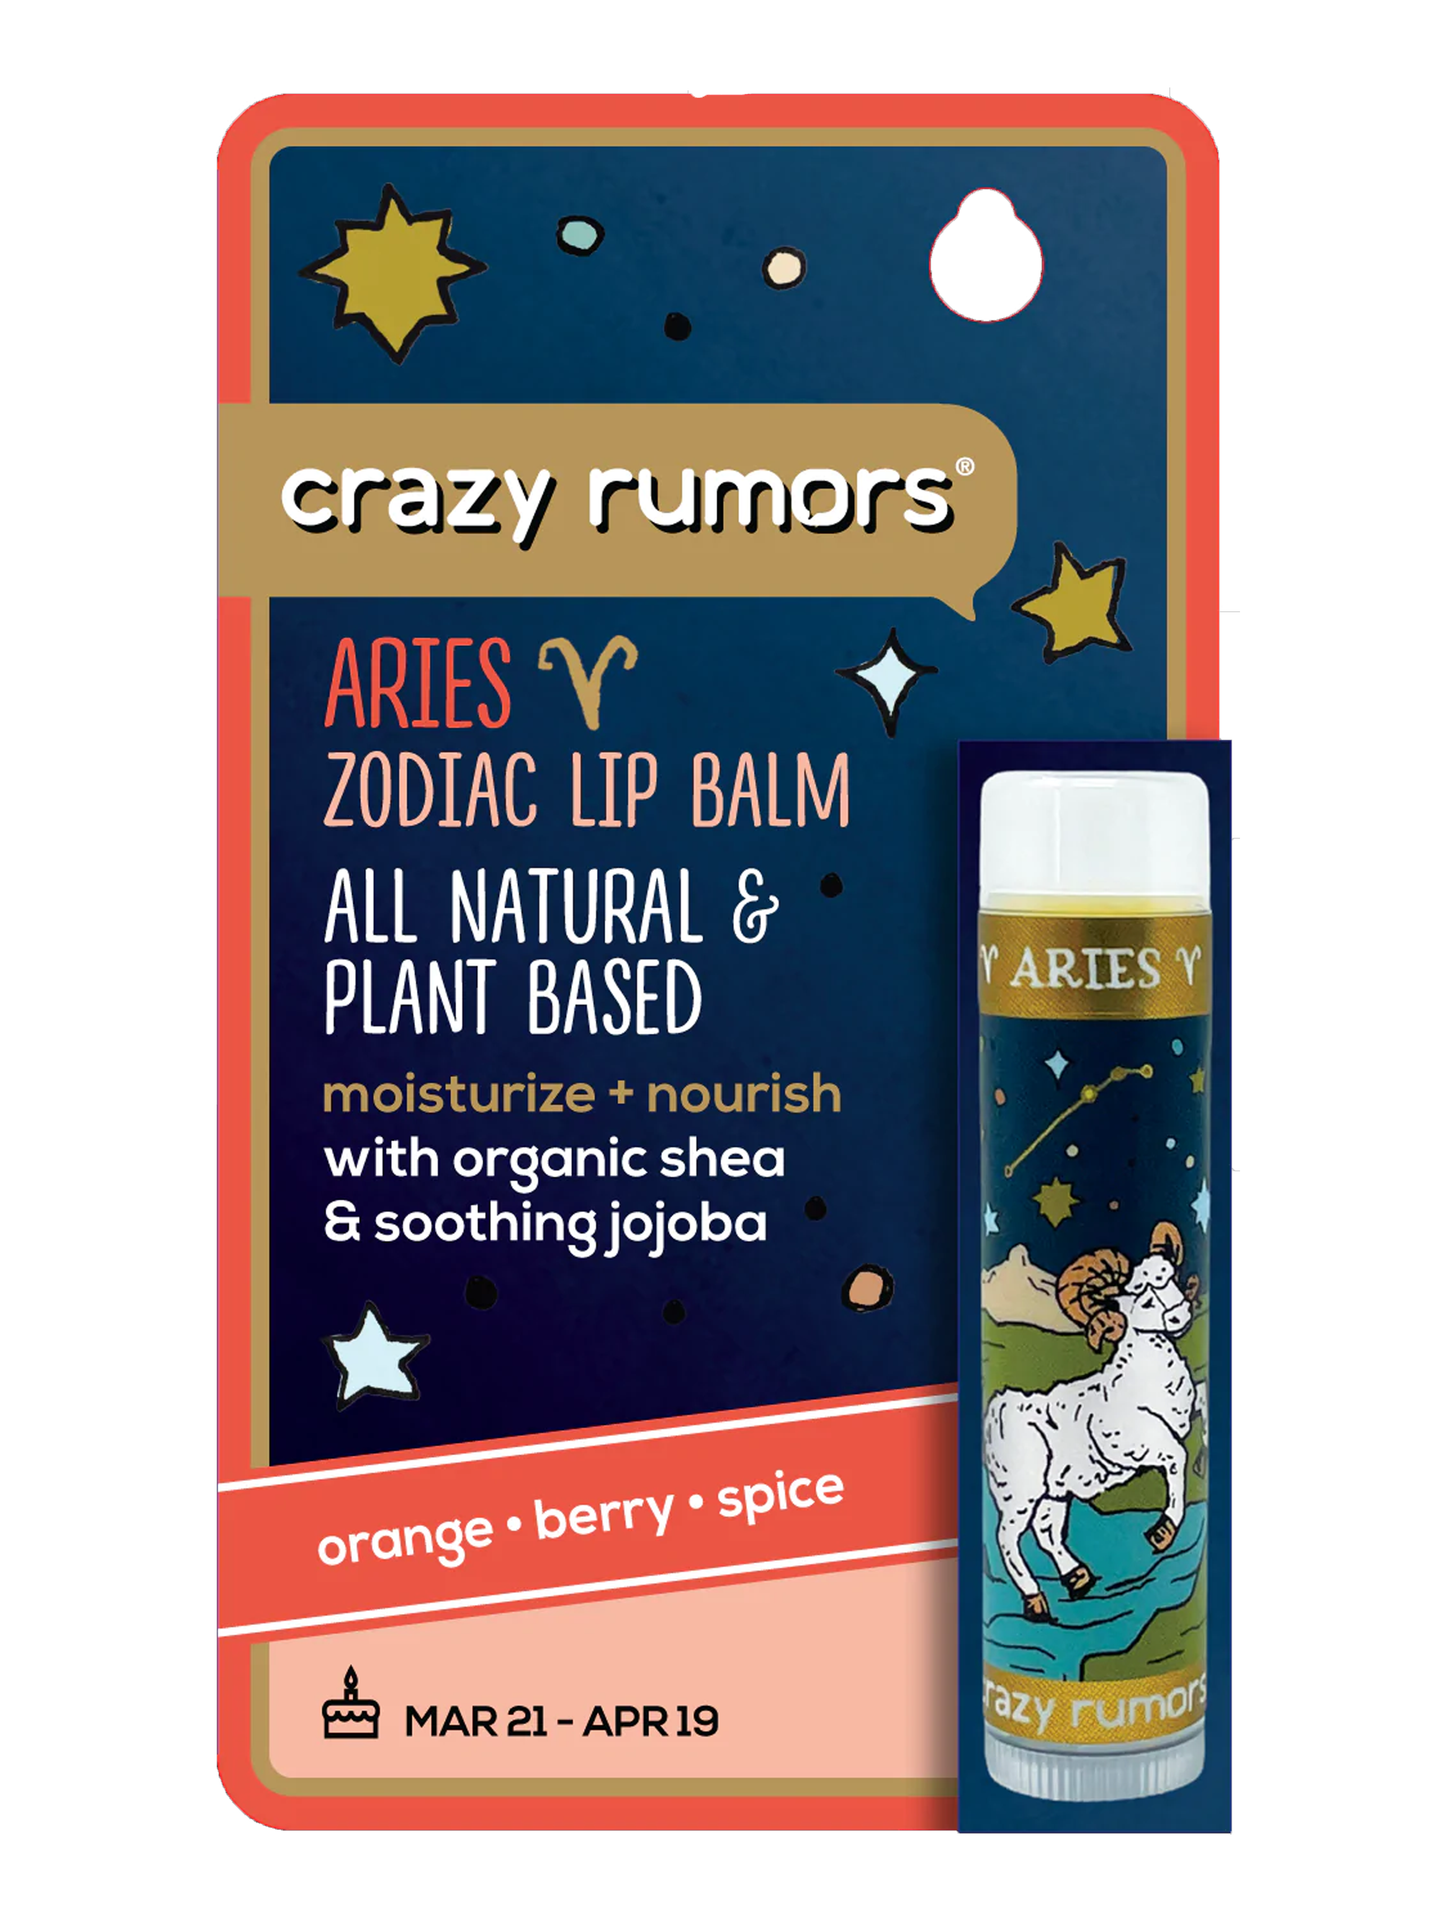 Crazy Rumors - Aries, Zodiac Lip Balm